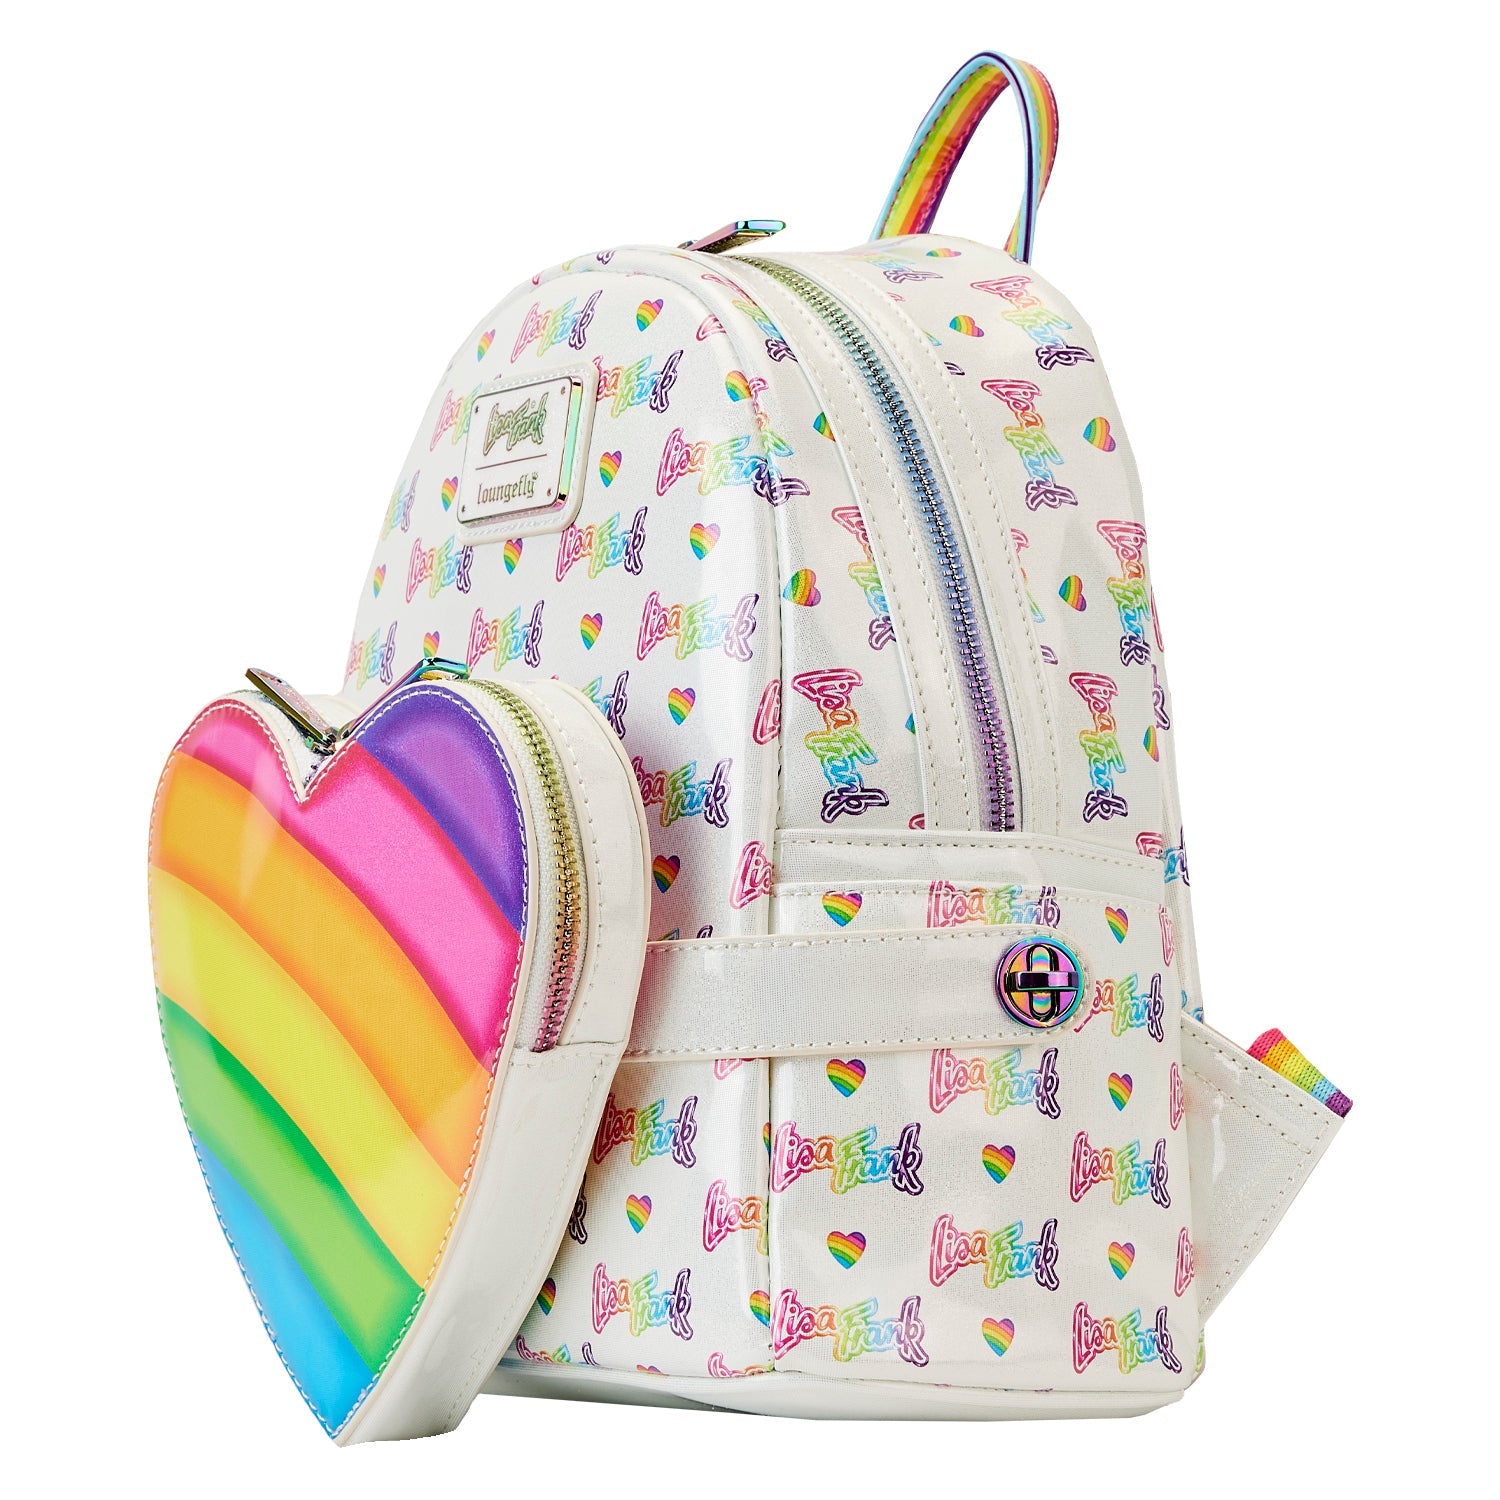 Loungefly x Lisa Frank Rainbow Heart Mini Backpack - GeekCore